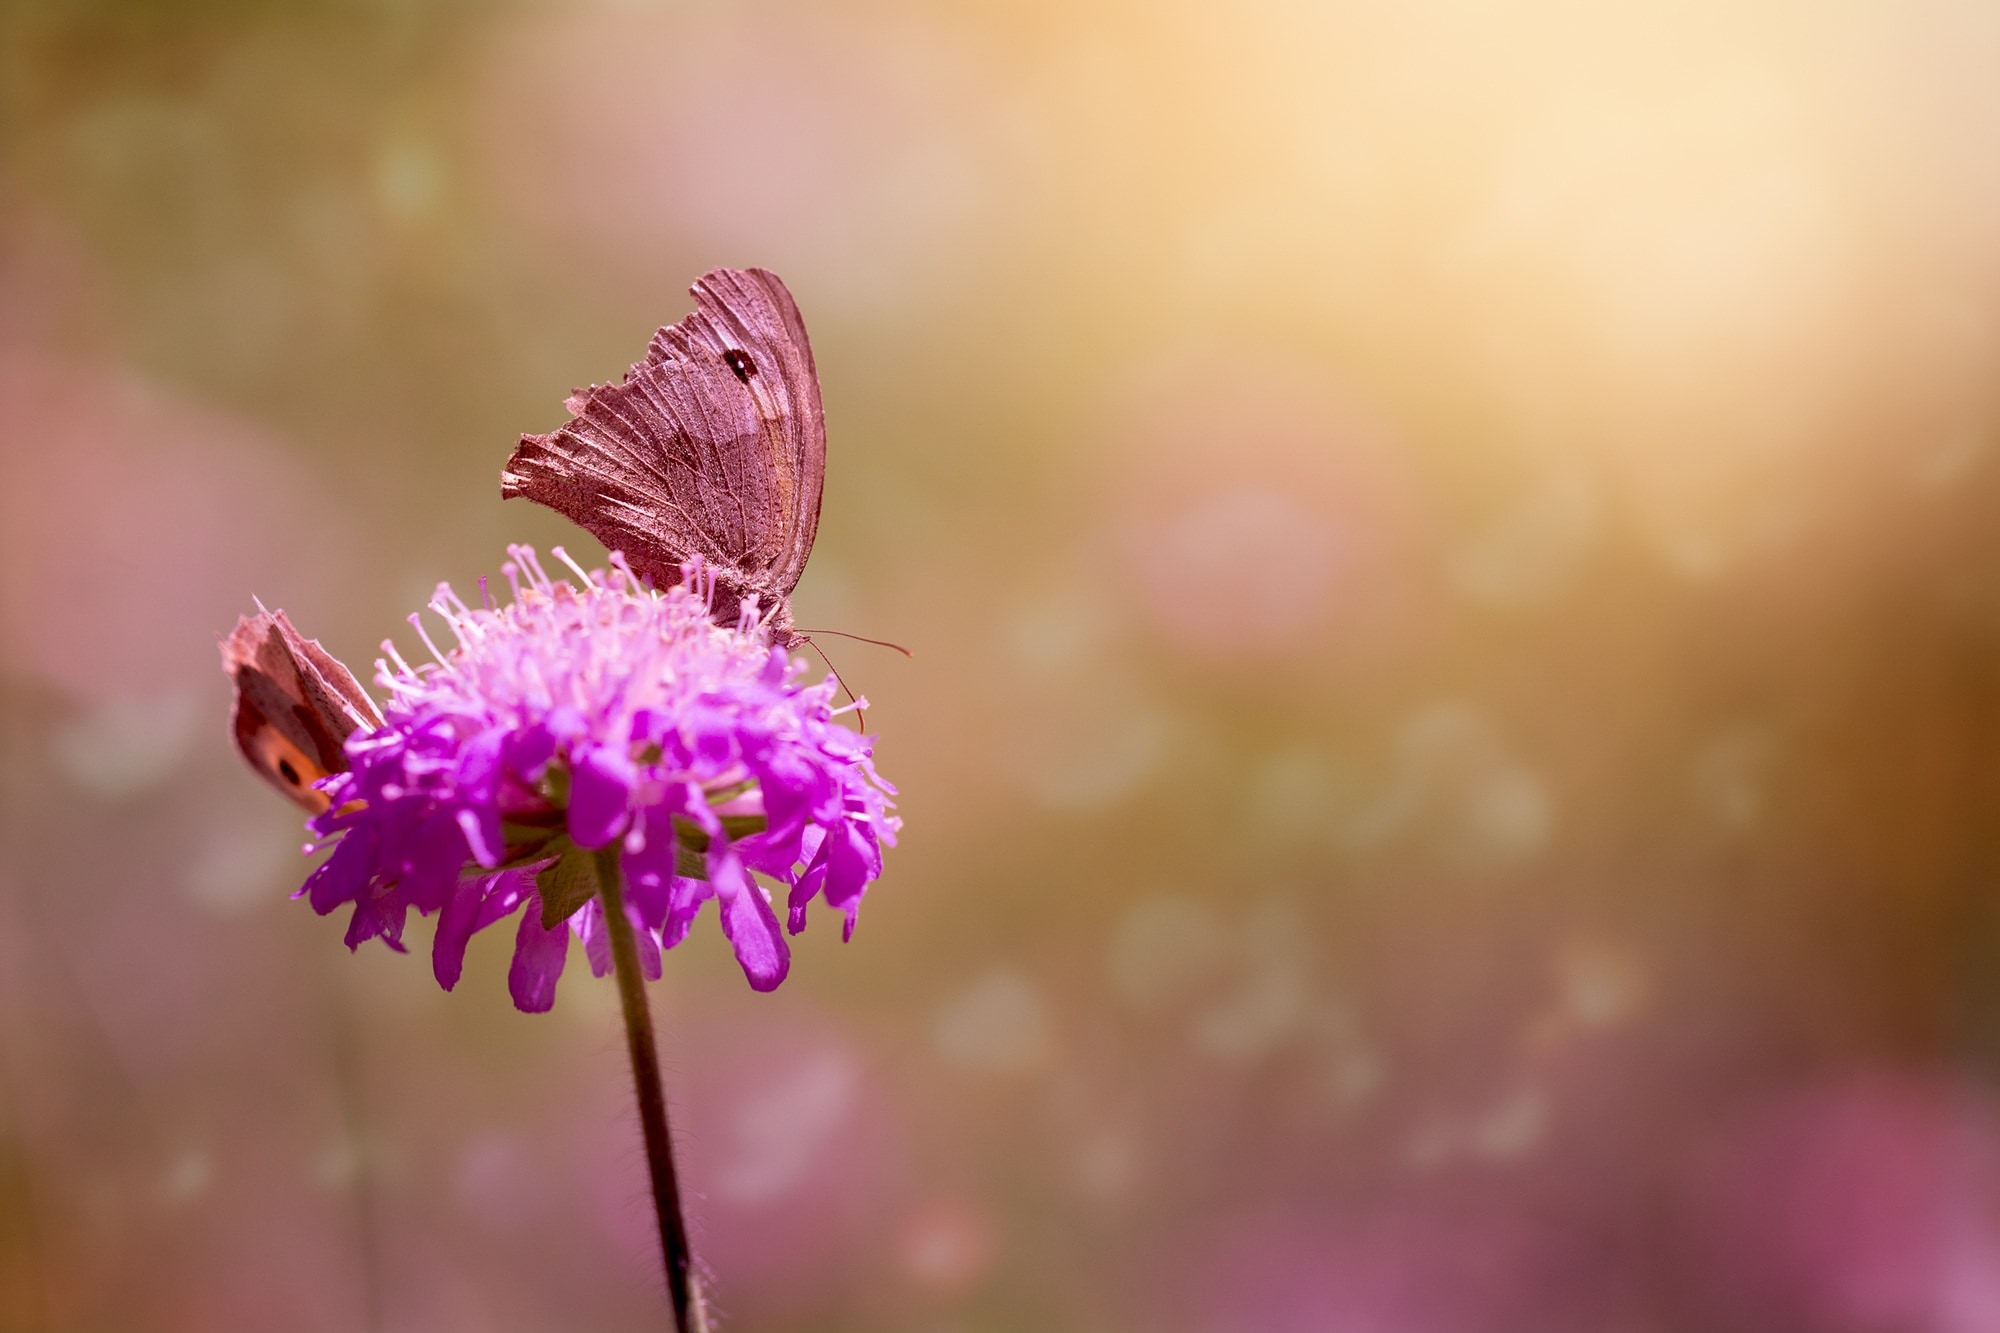 butterfly perched on purple petaled flower